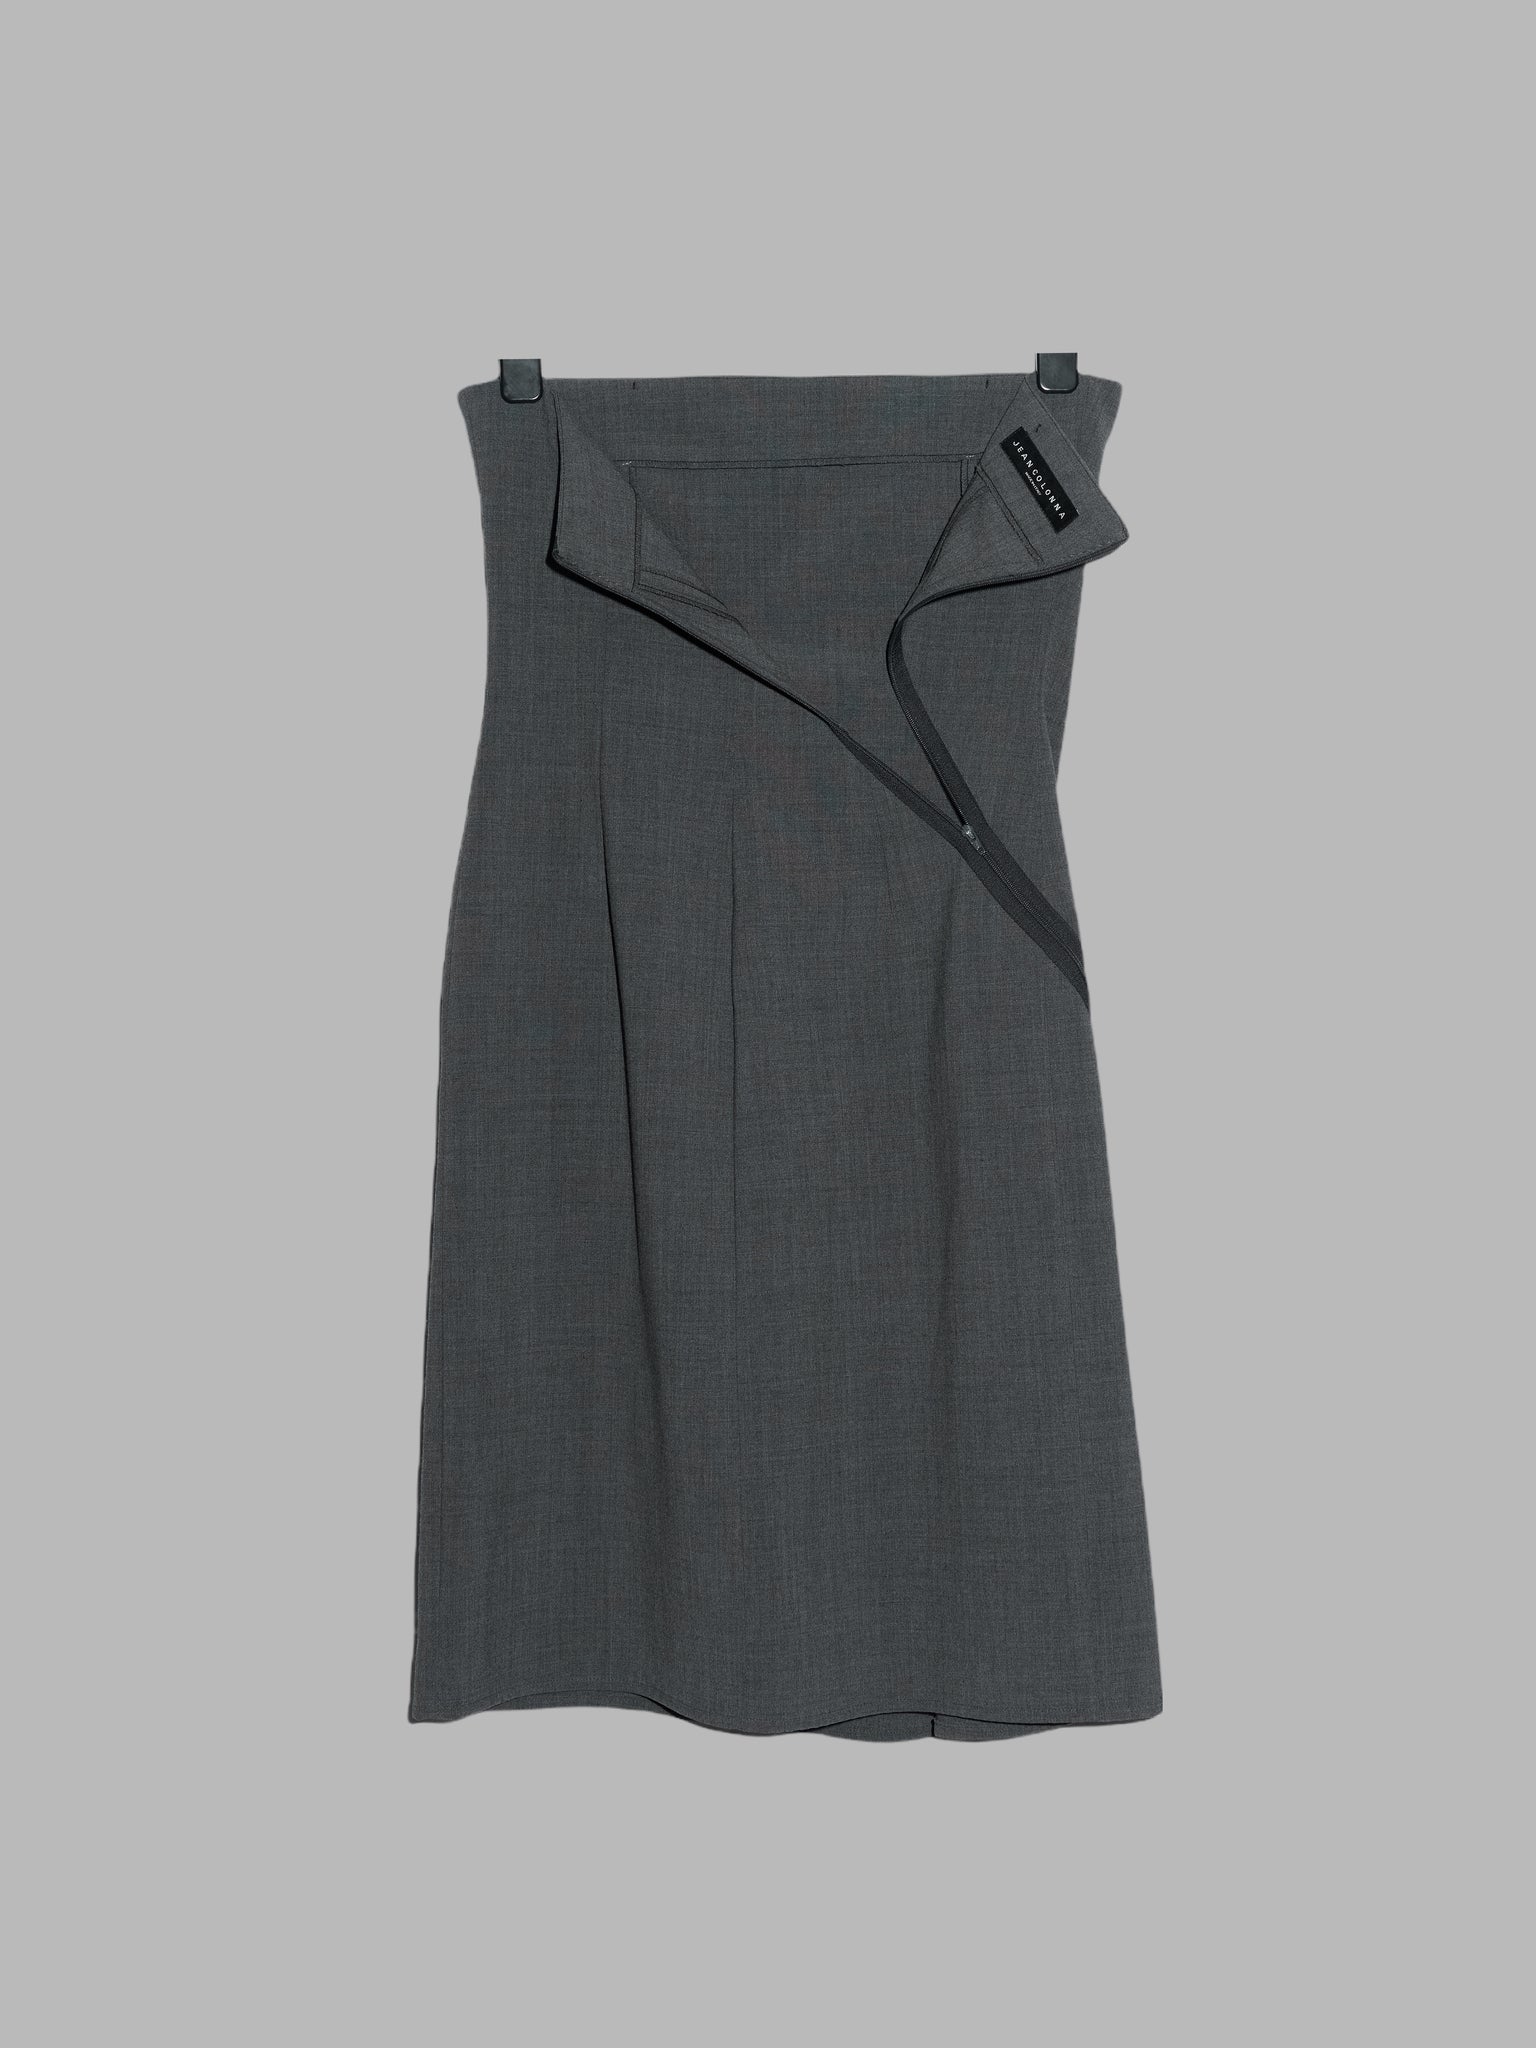 Jean Colonna grey stretch wool strapless dress with angled zip - sz 42